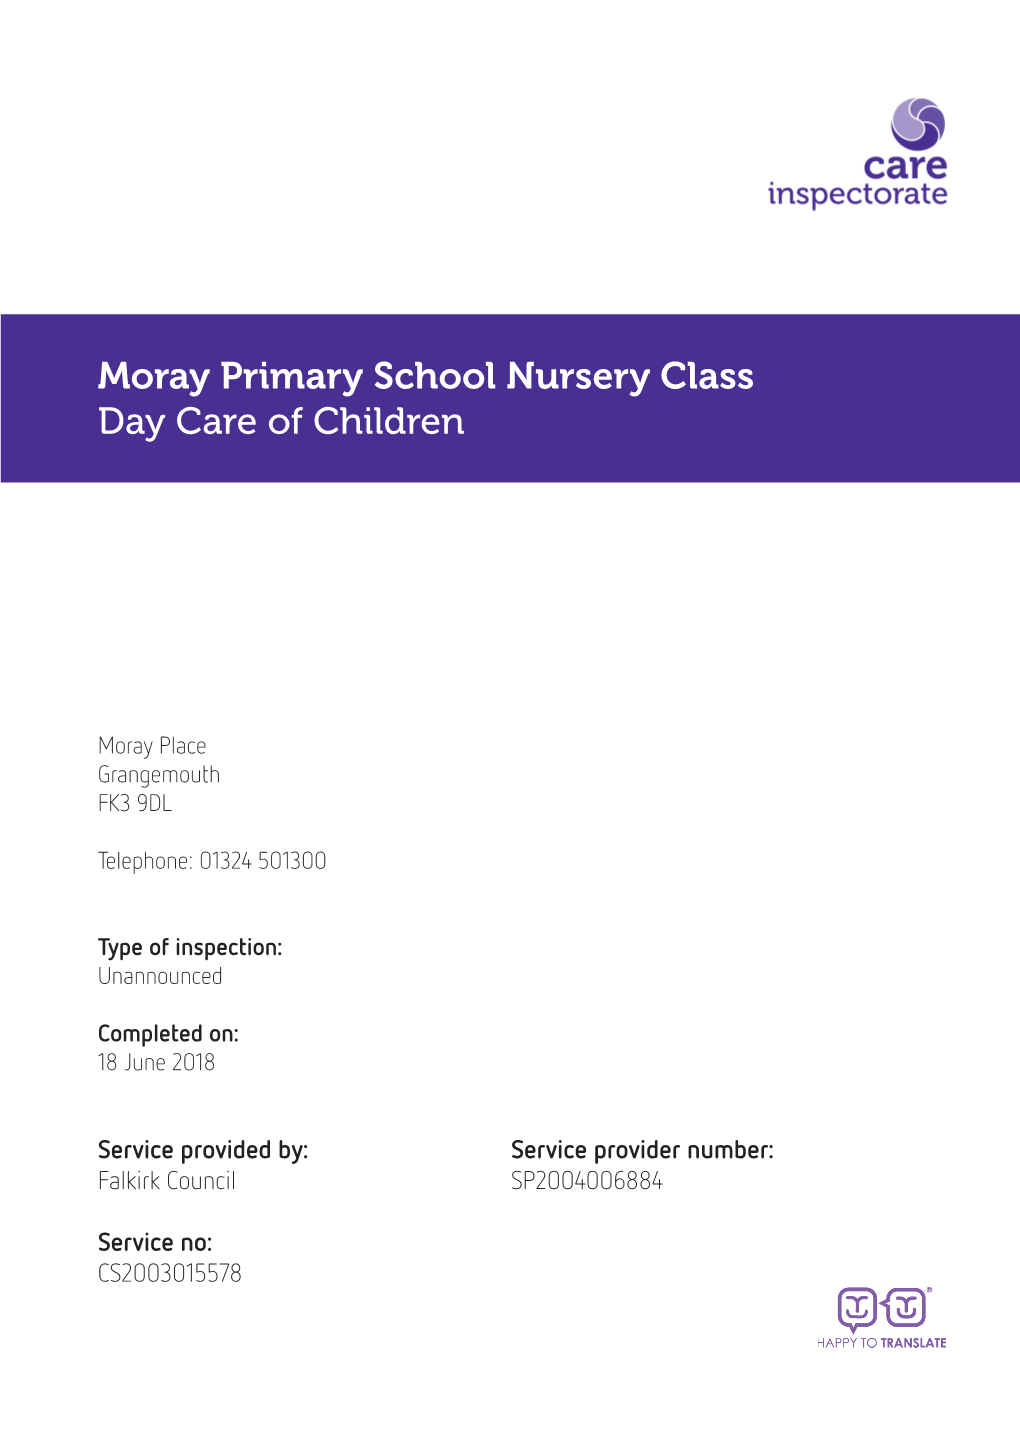 Moray Primary School Nursery Class Day Care of Children